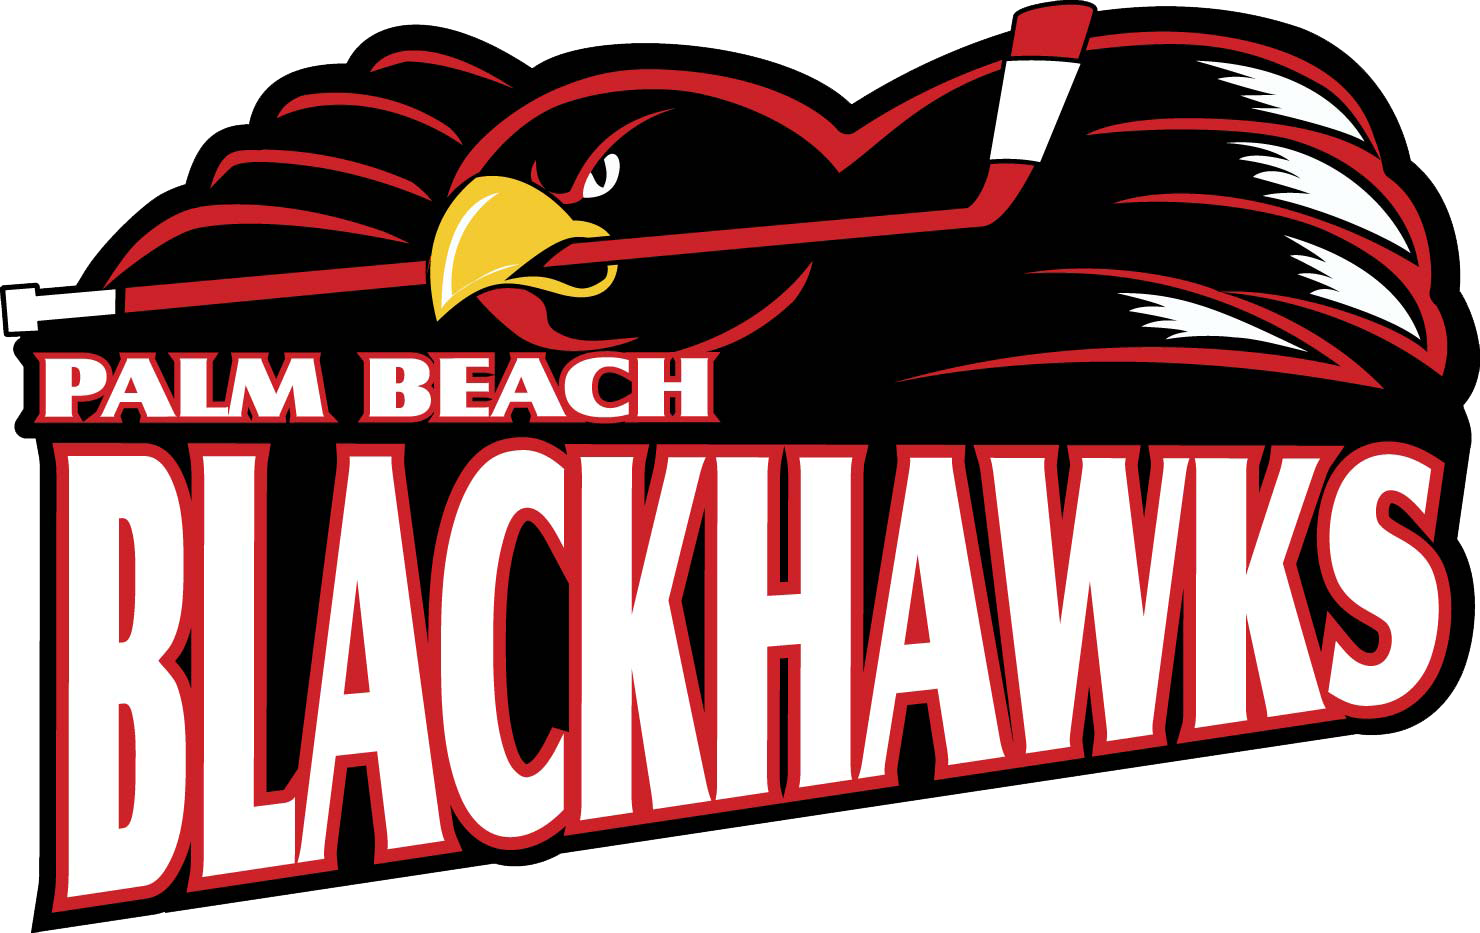 Palm Beach Blackhawks Red, Fl - Palm Beach Blackhawks Red, Fl (1480x933)